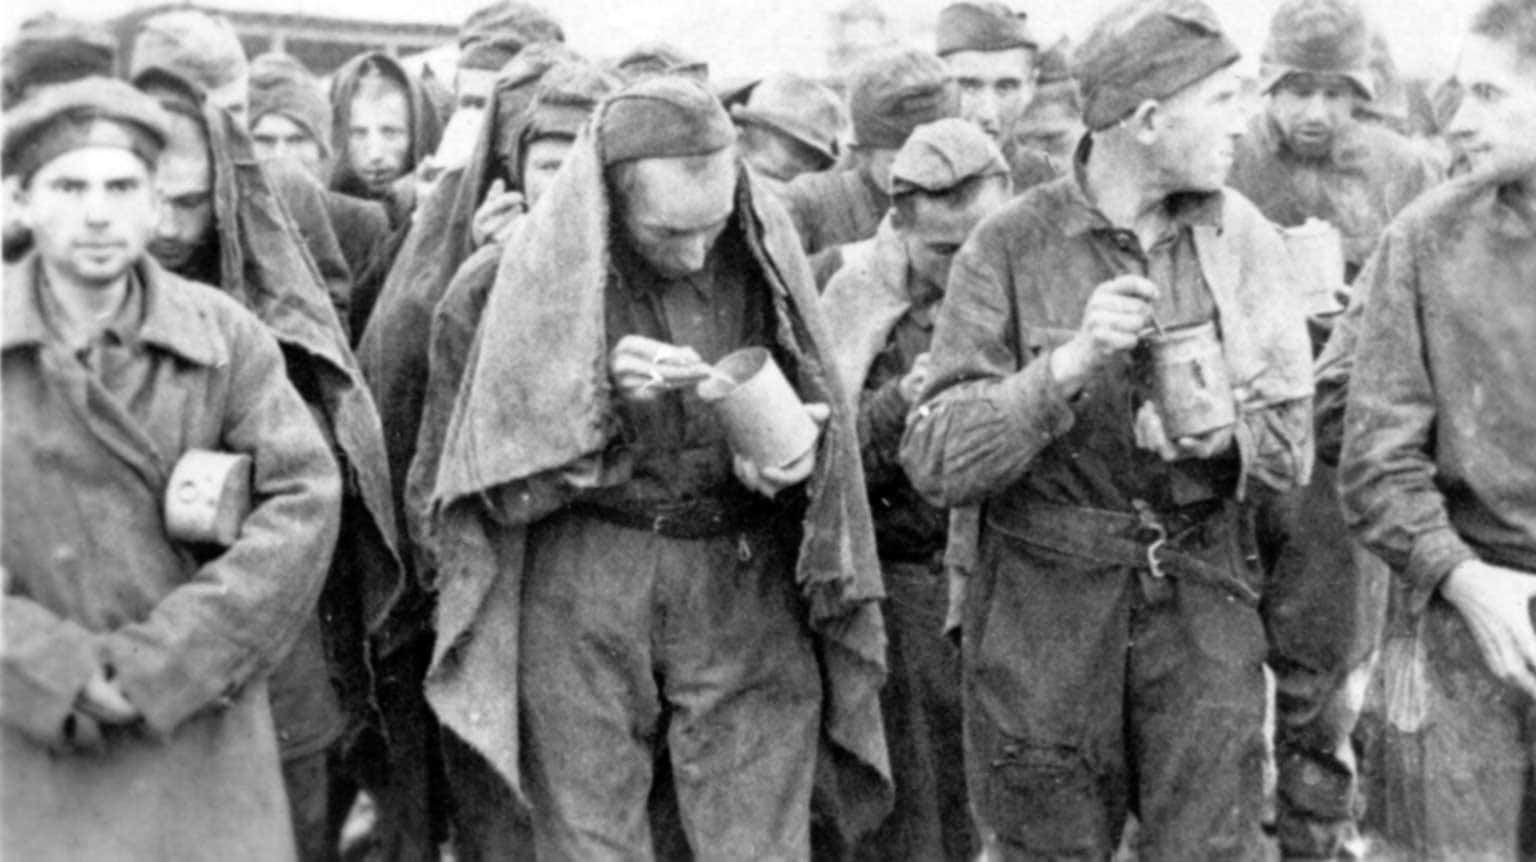 The Soviet prisoners of war